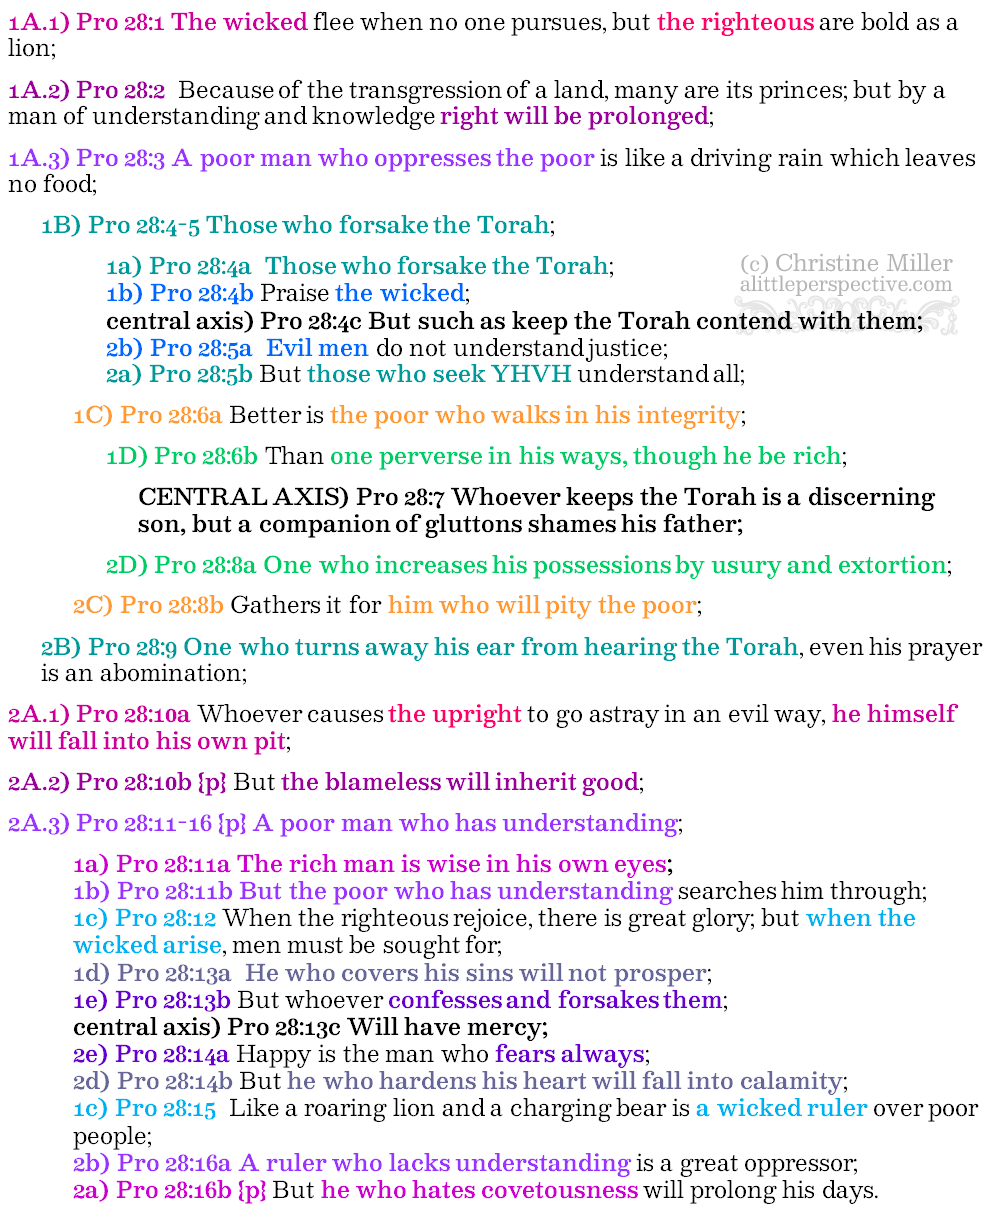 Pro 28:1-16 chiasm | christine's bible study at alittleperspective.com